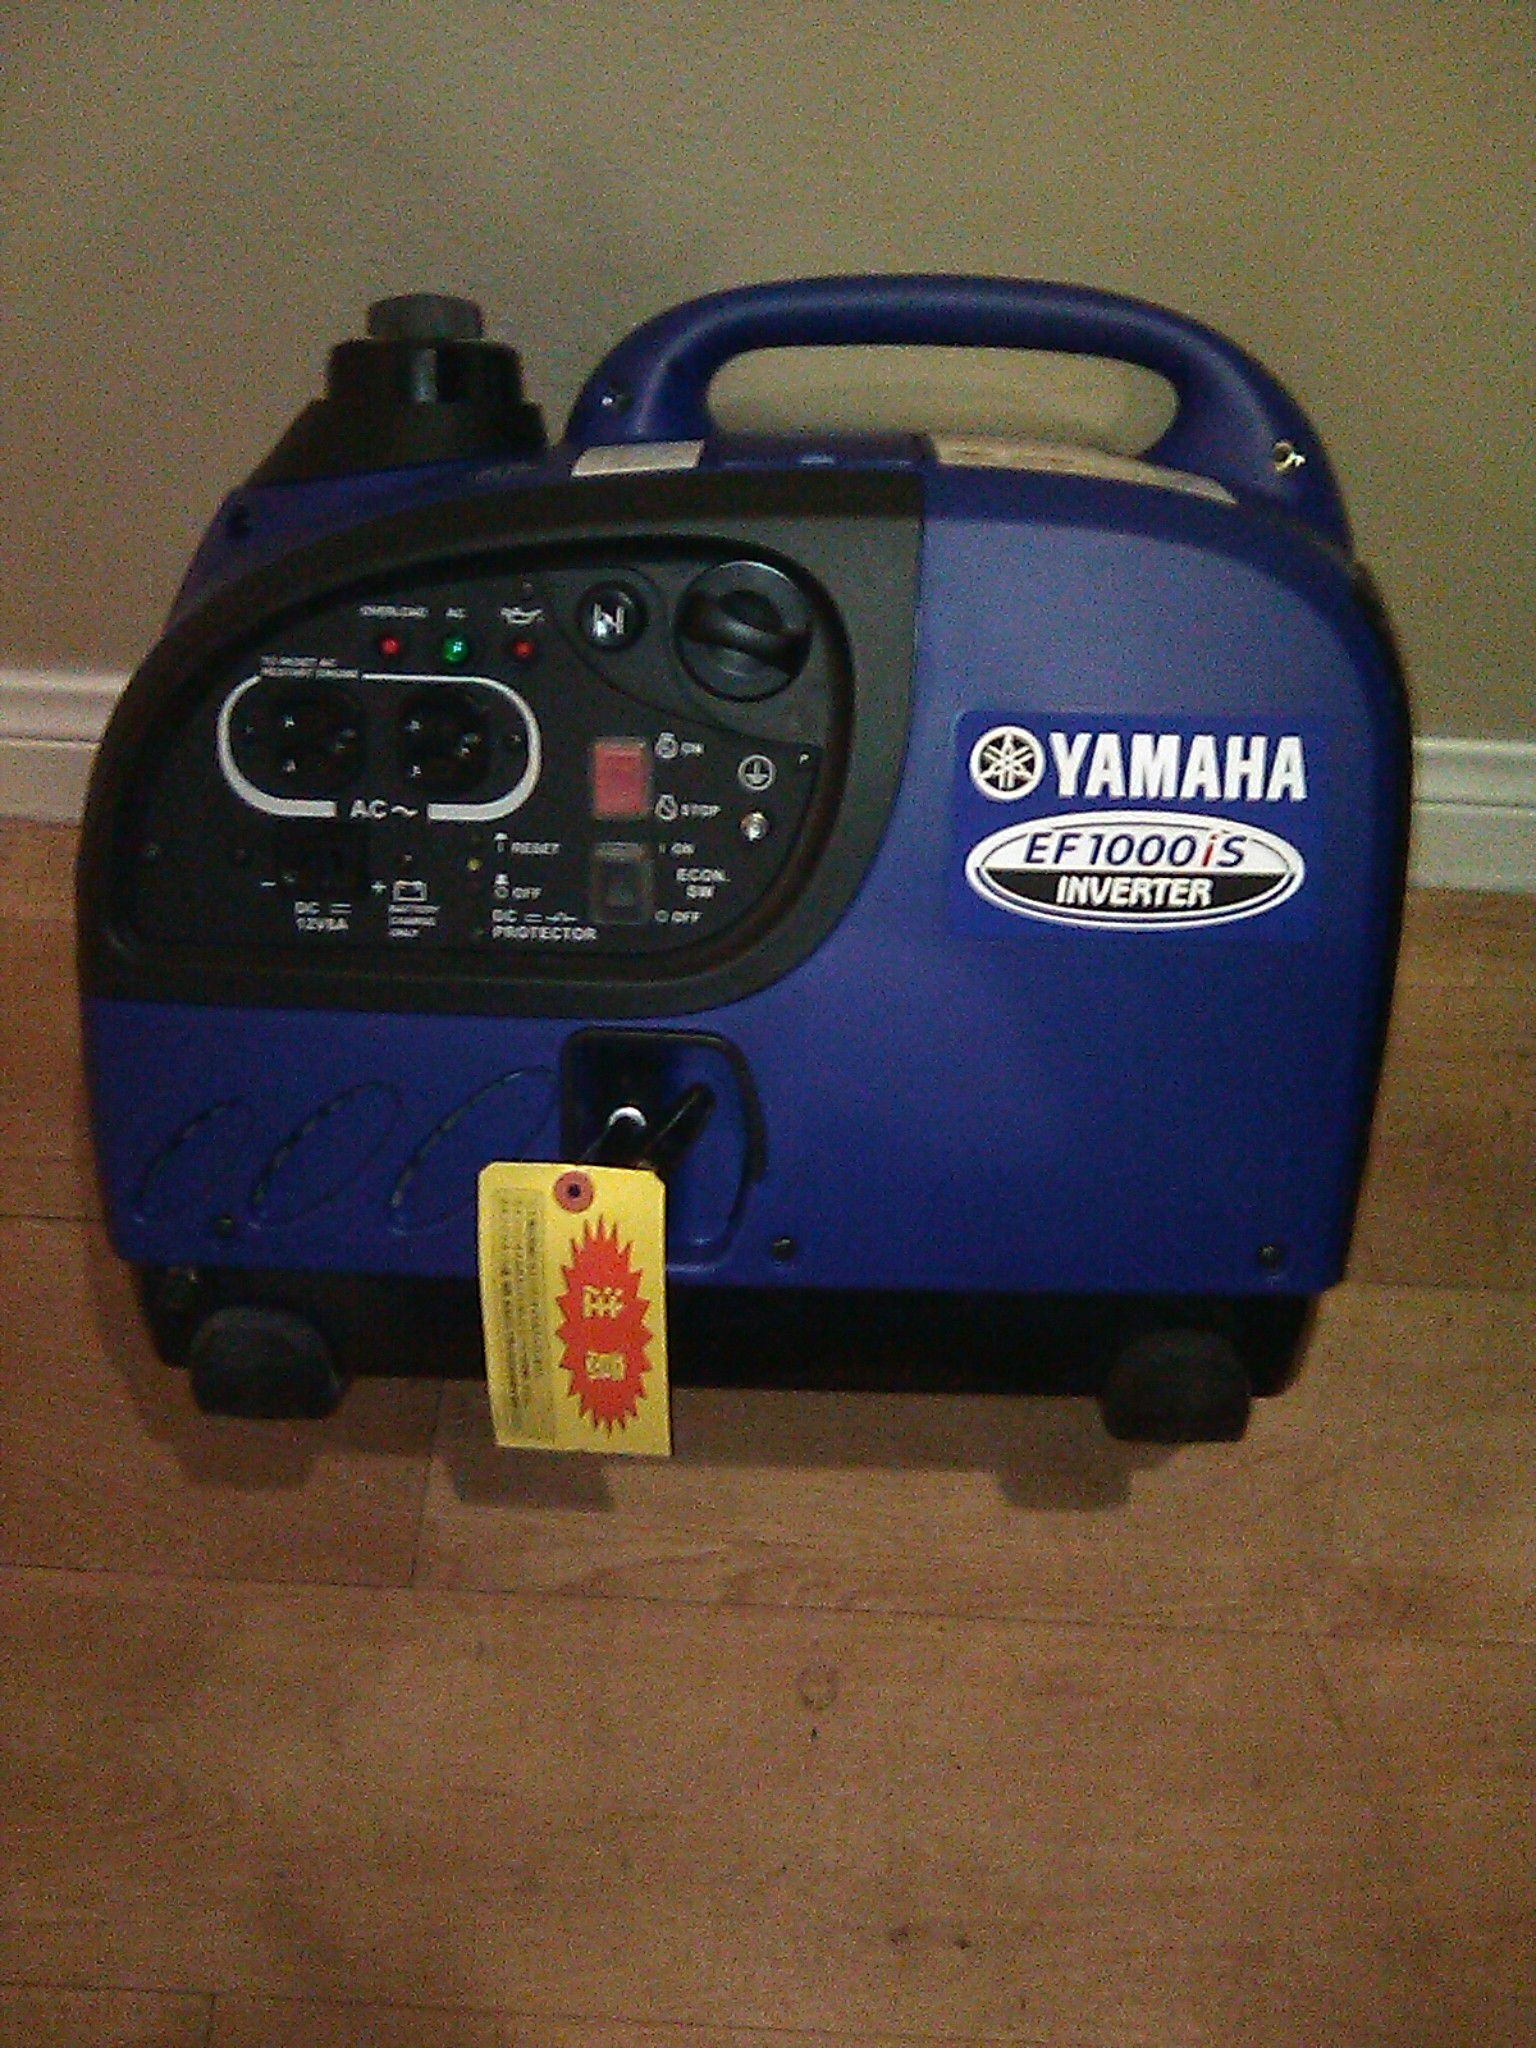 Yamaha ES1000is portable inverter